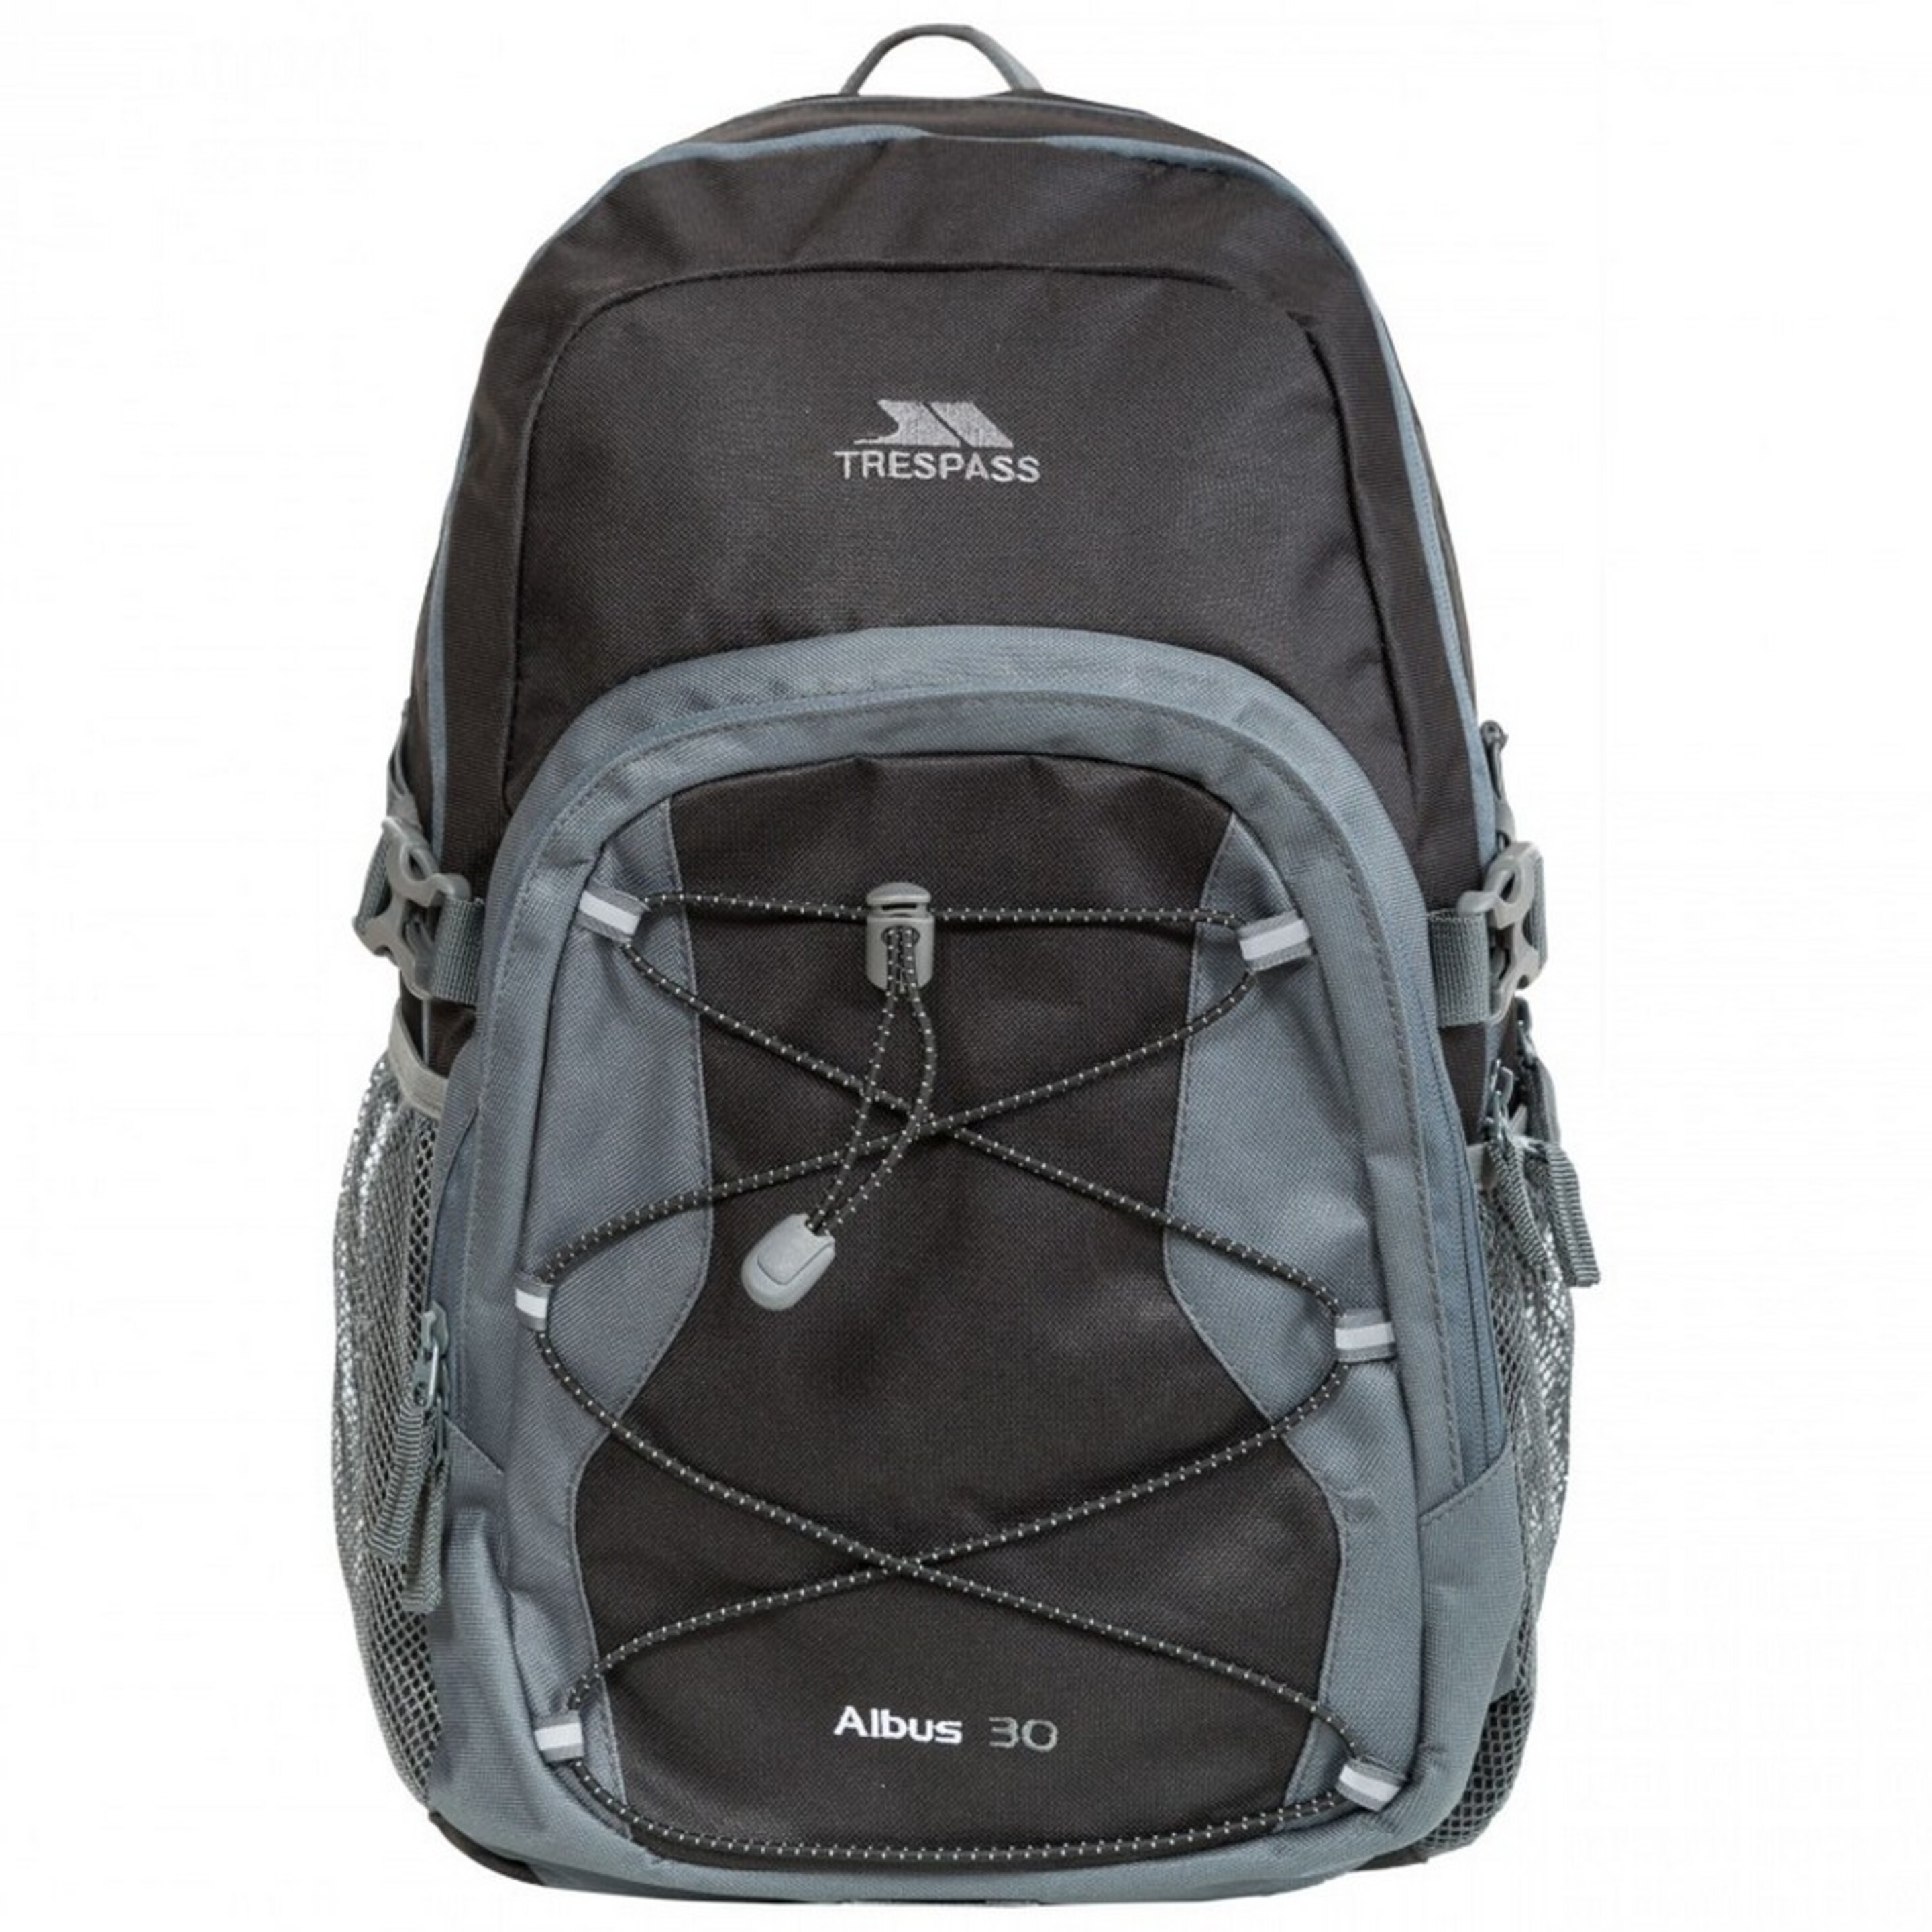 30 Litre Casual Rucksack/backpack Trespass Albus - gris - 